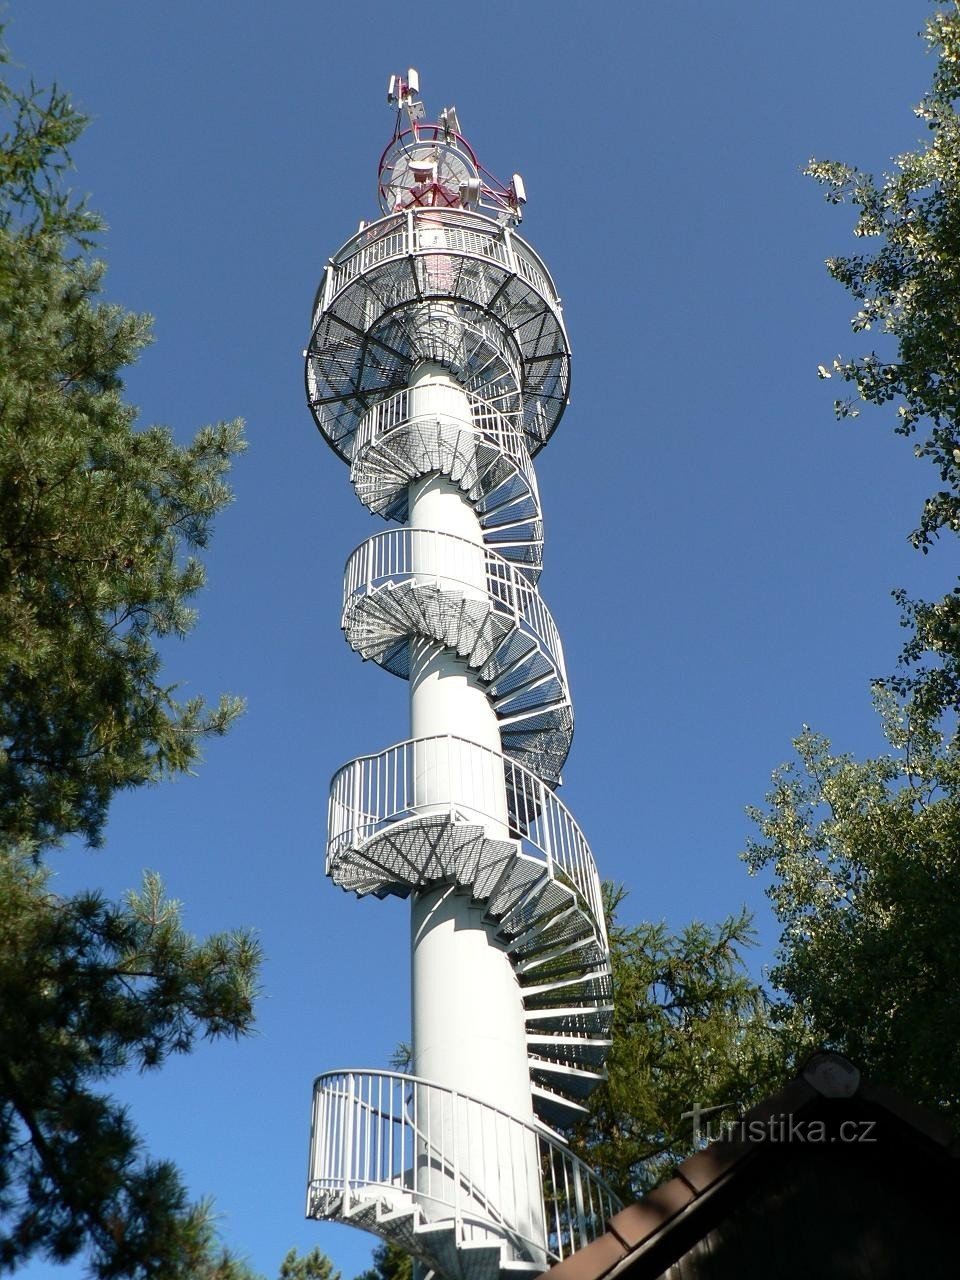 Pětnice lookout tower